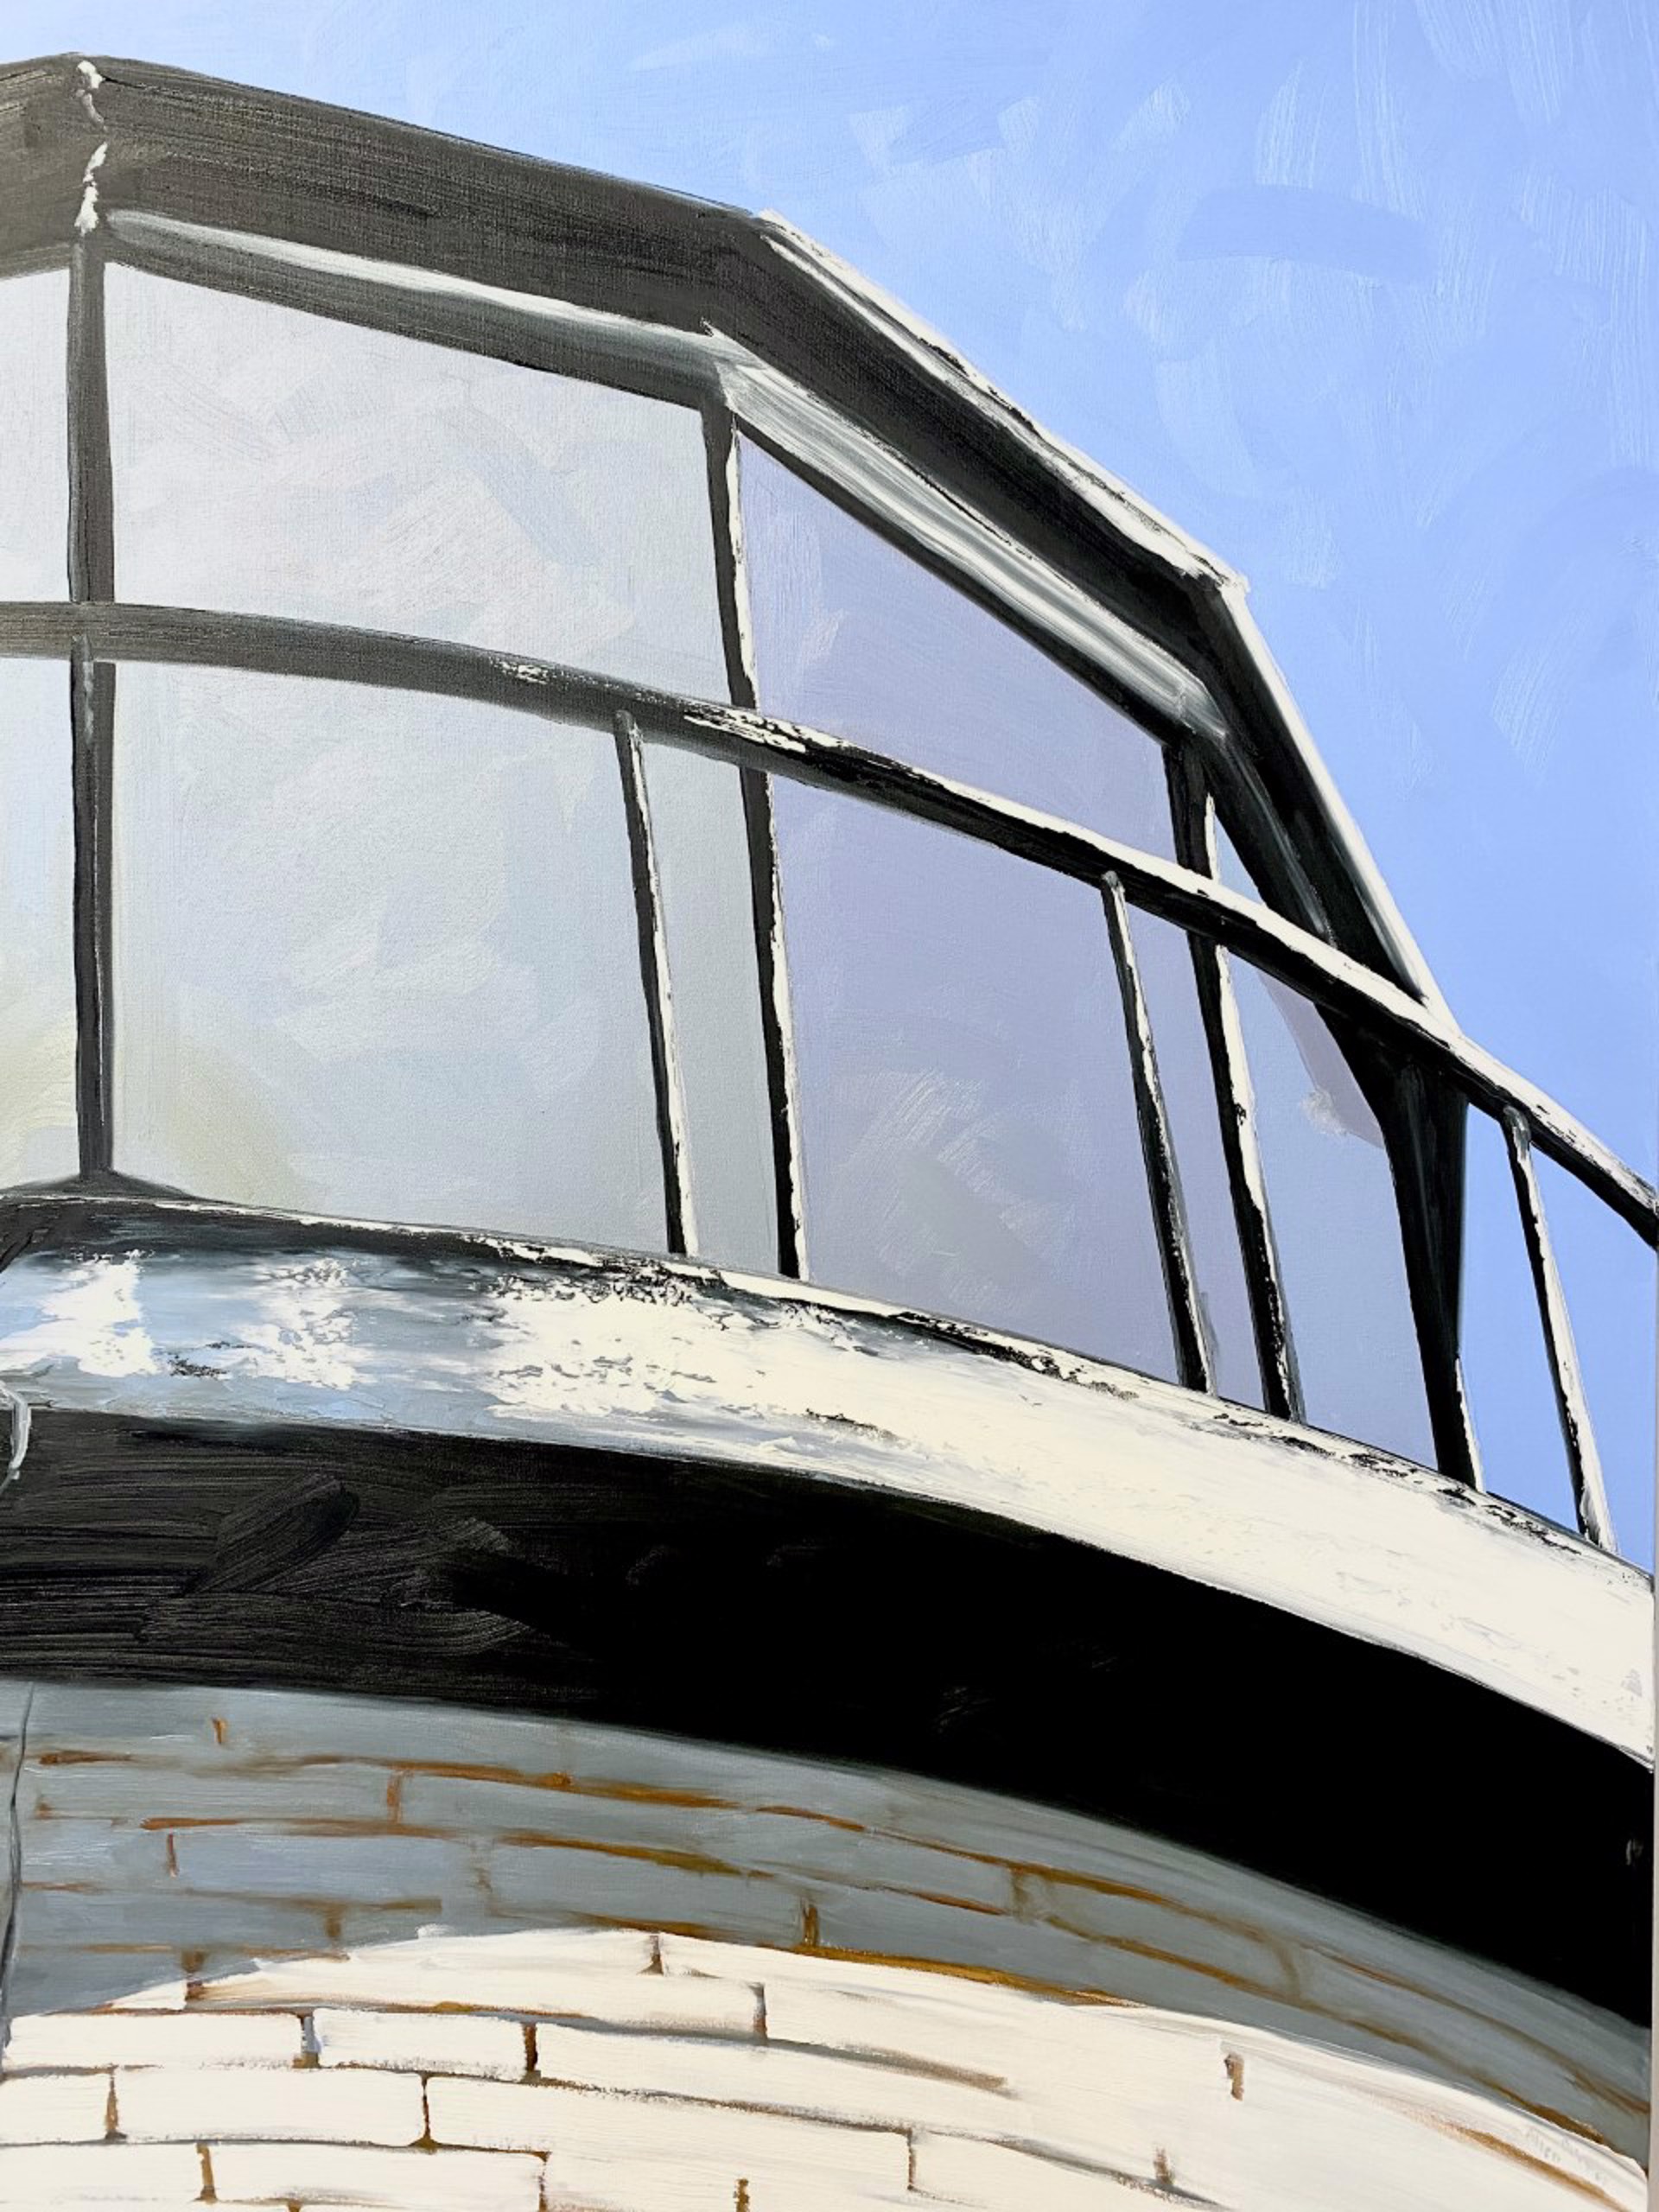 Owl's Head Lighthouse by Allen Bunker